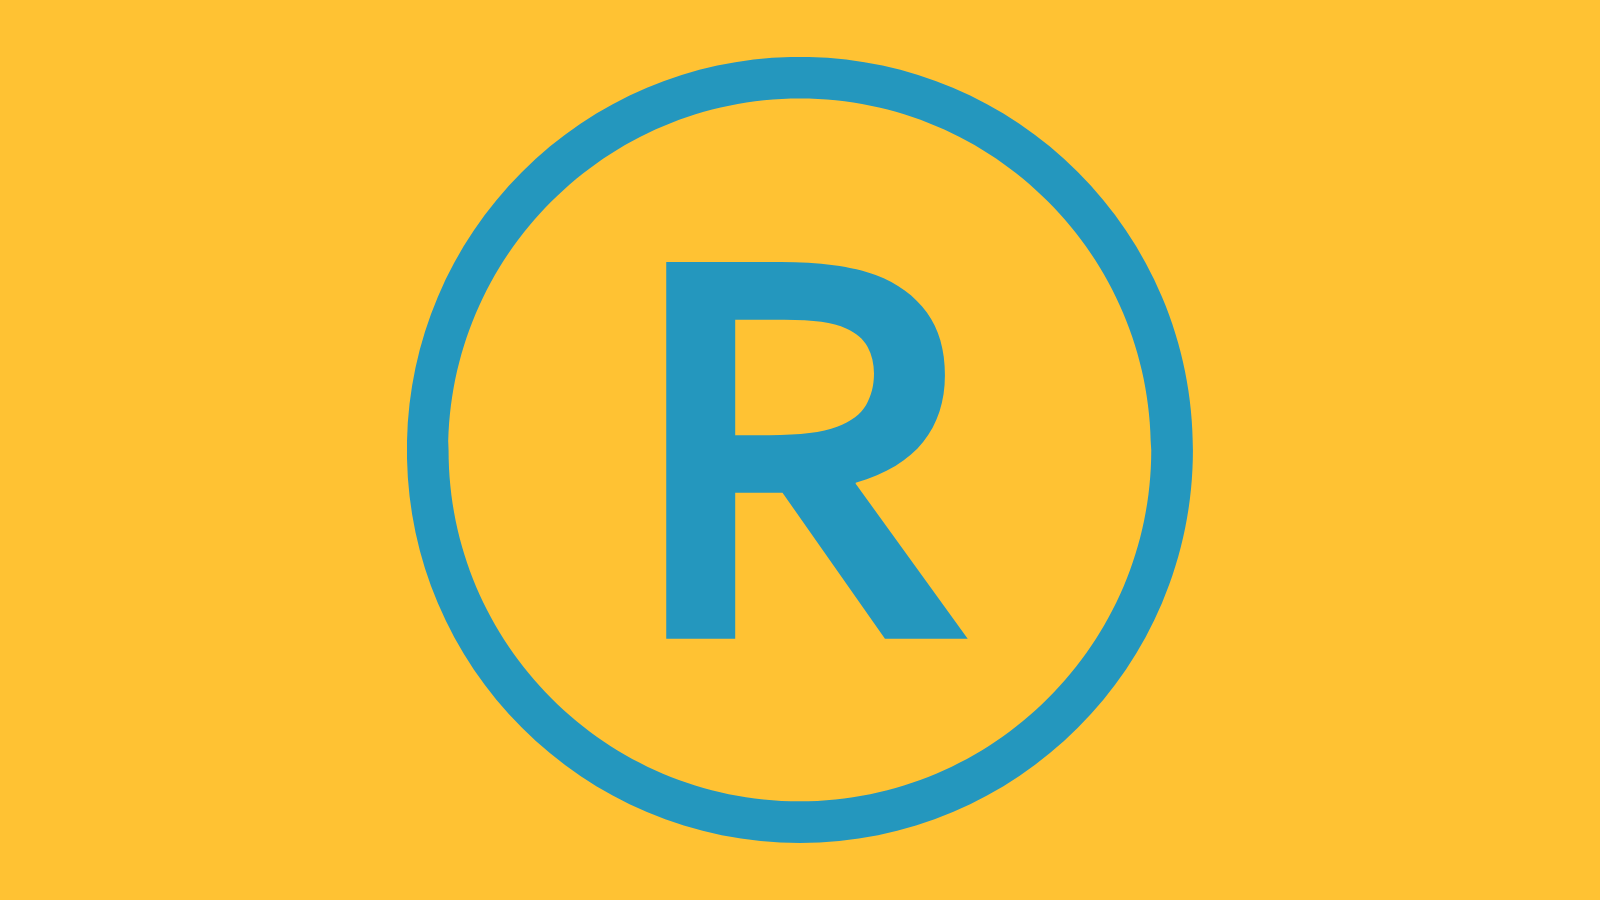 The Registered Trademark symbol